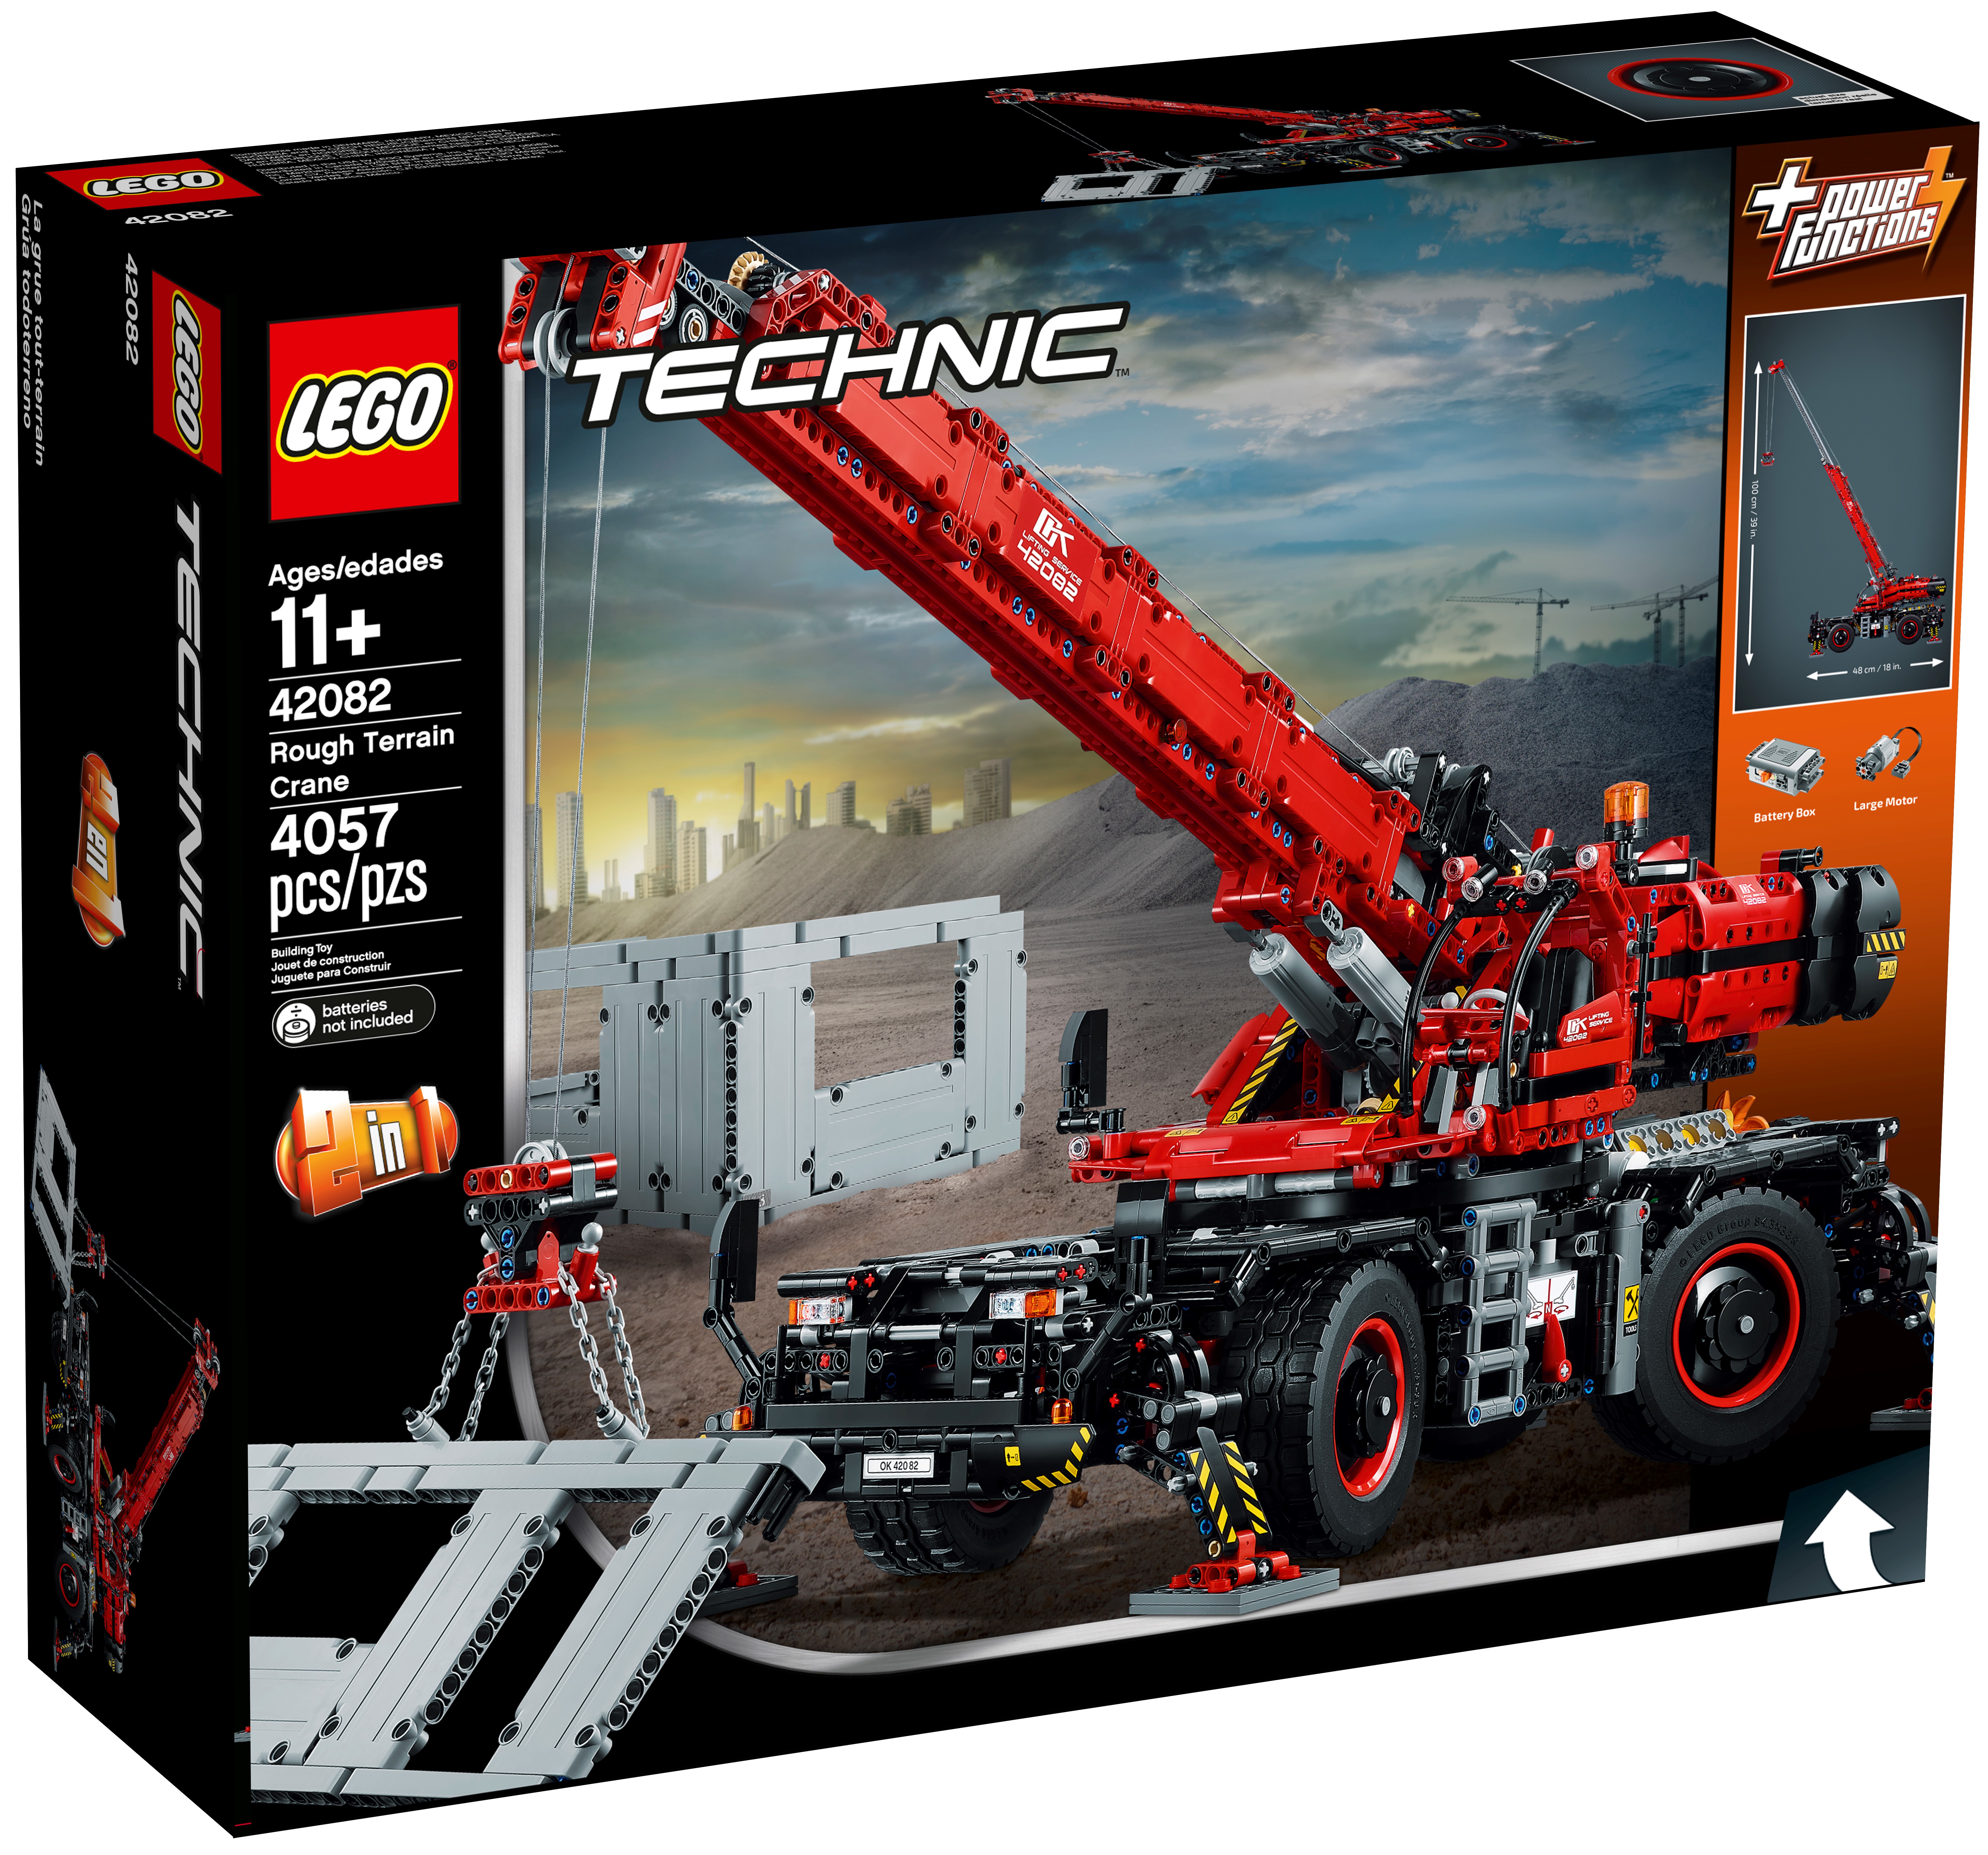 LEGO TECHNIC 42082 X2 Red Technic Panel 3 x 7 x 2 24119 